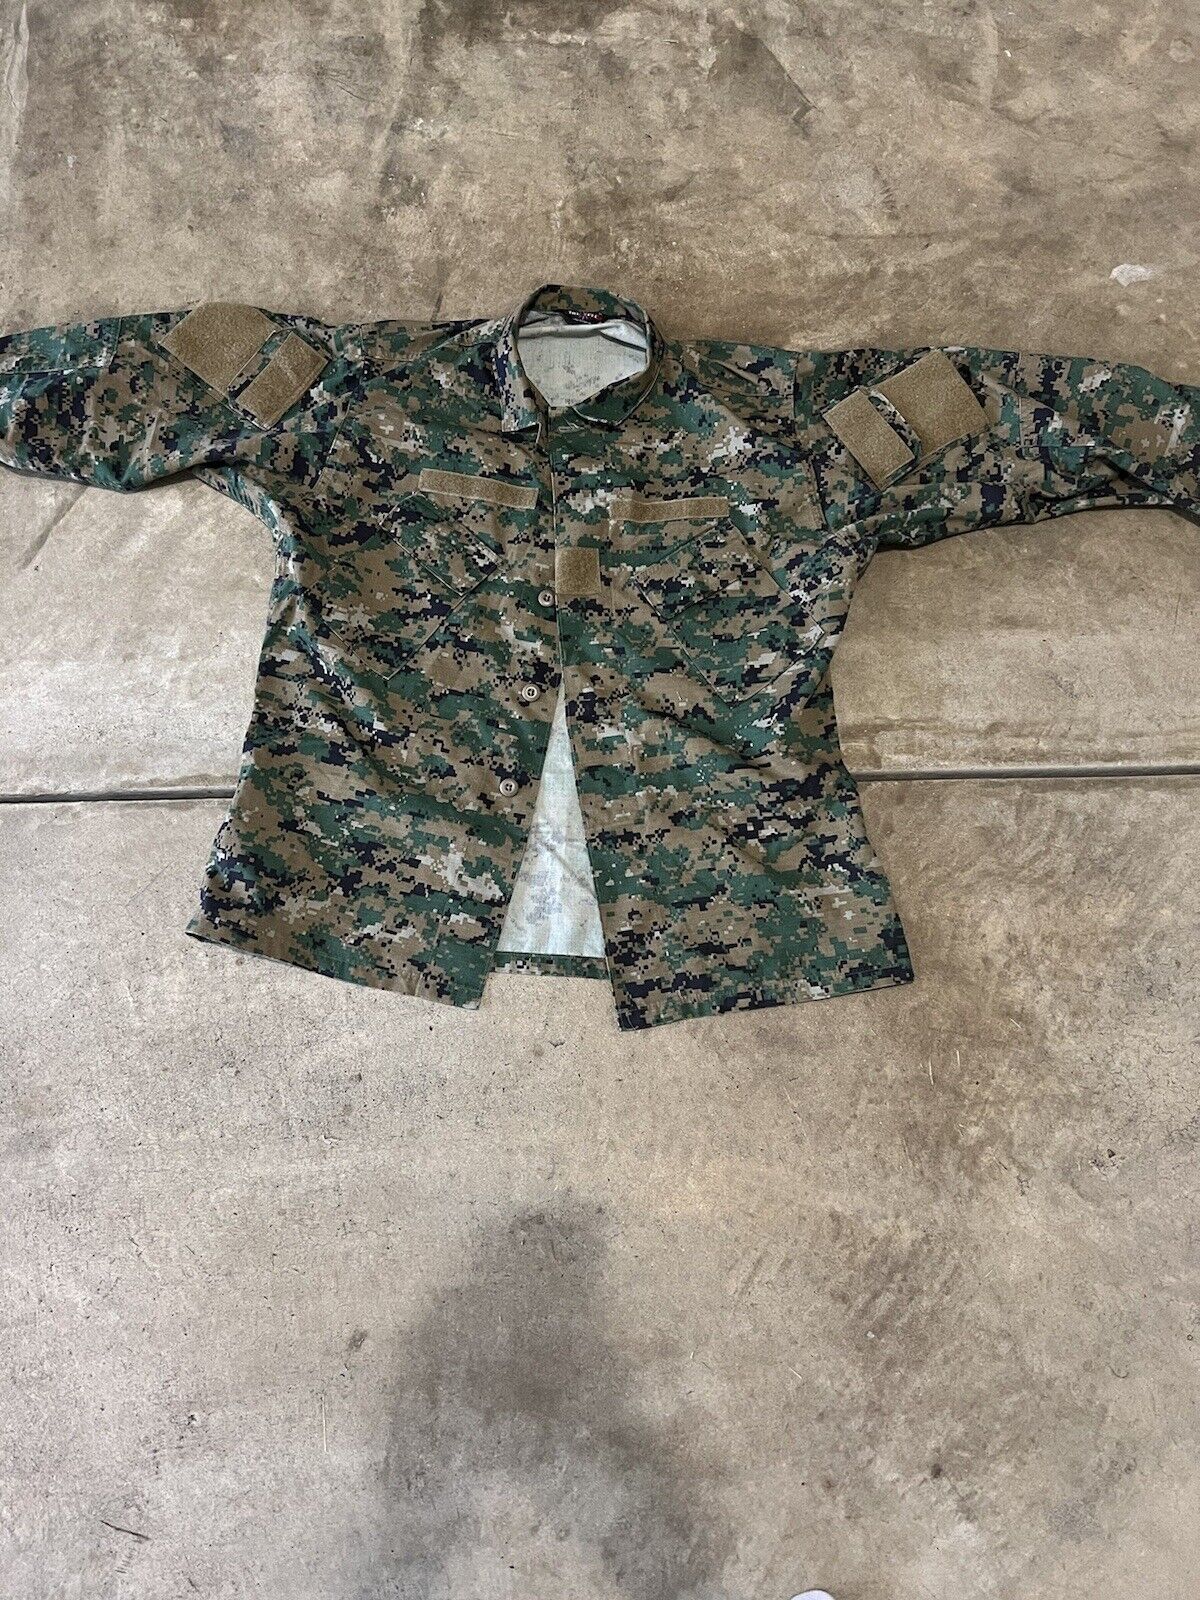 USMC MARPAT Trouse Digital Woodland Blouse Jacket Large Regular. Green, Camo